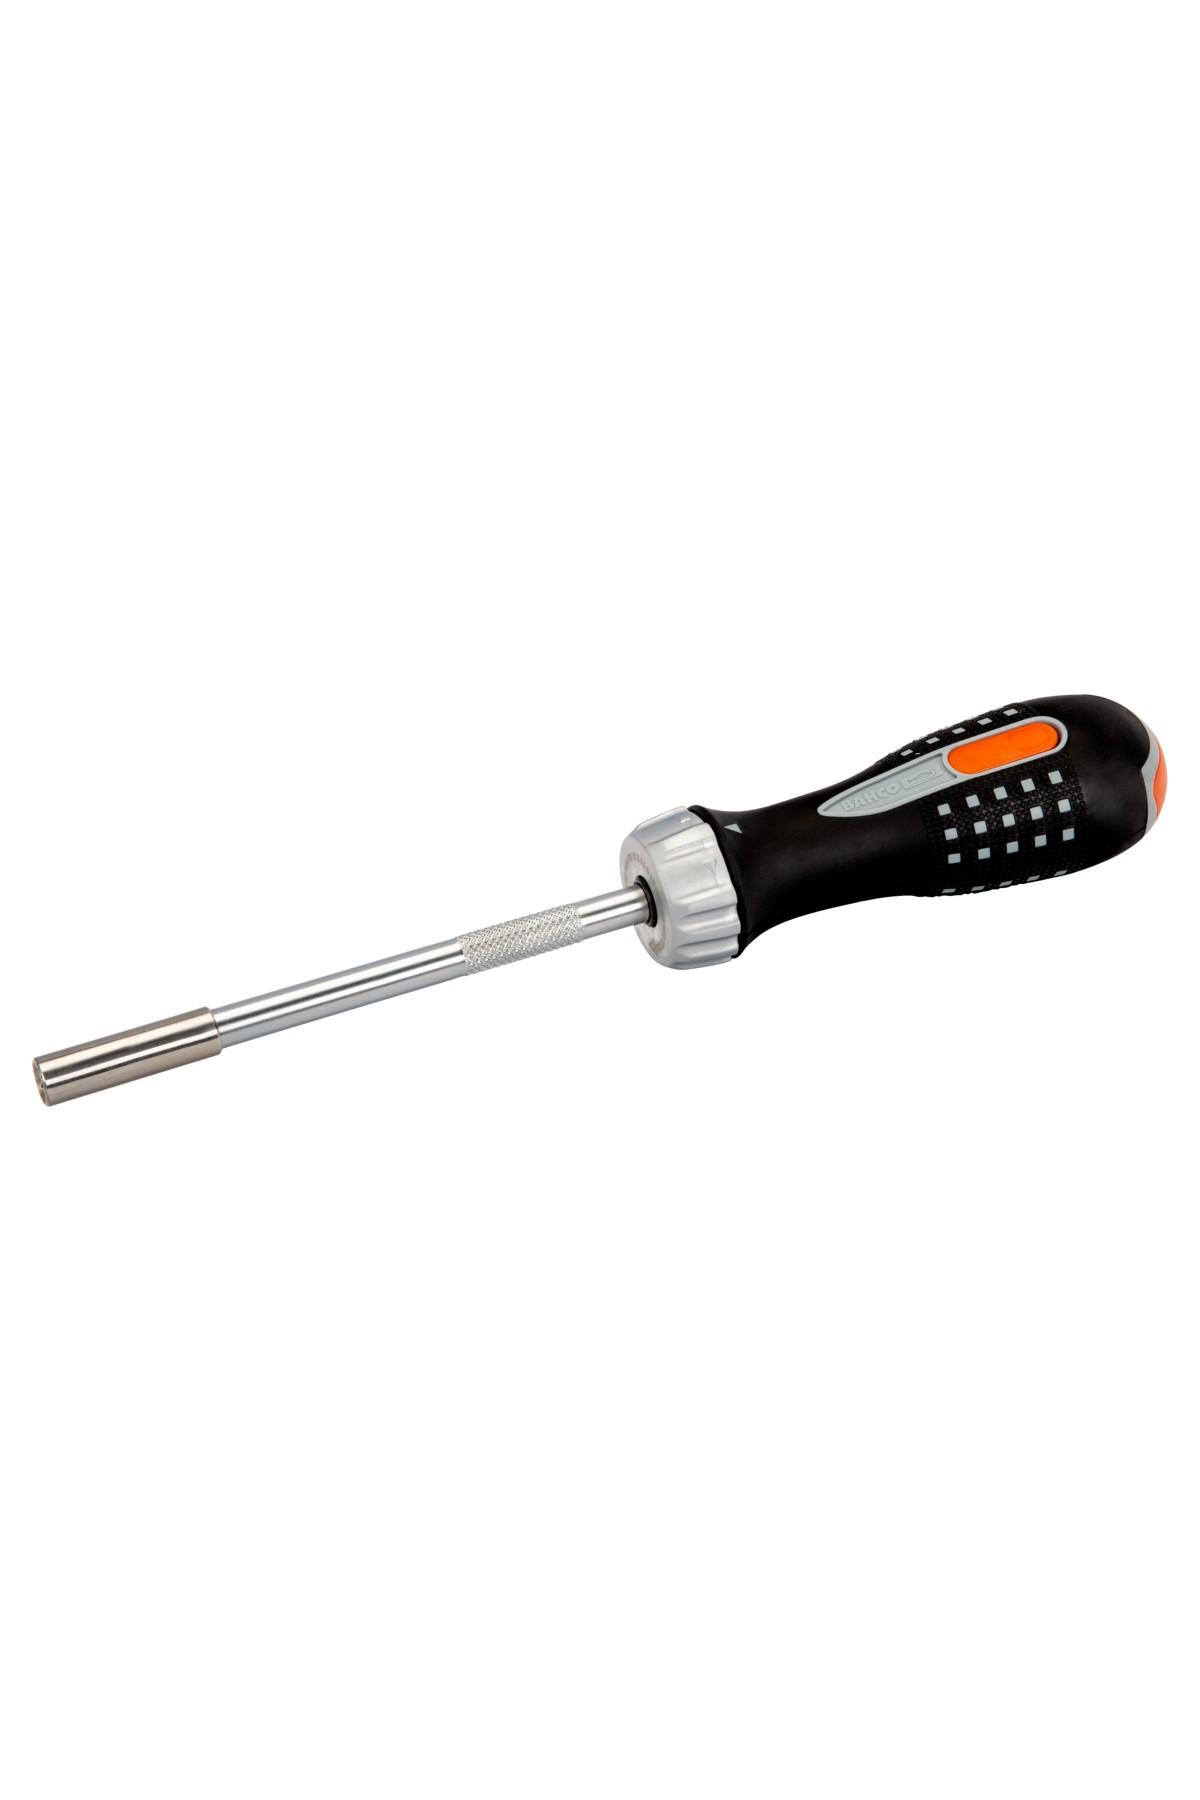 Ratchet screwdriver with bit holder 1/4